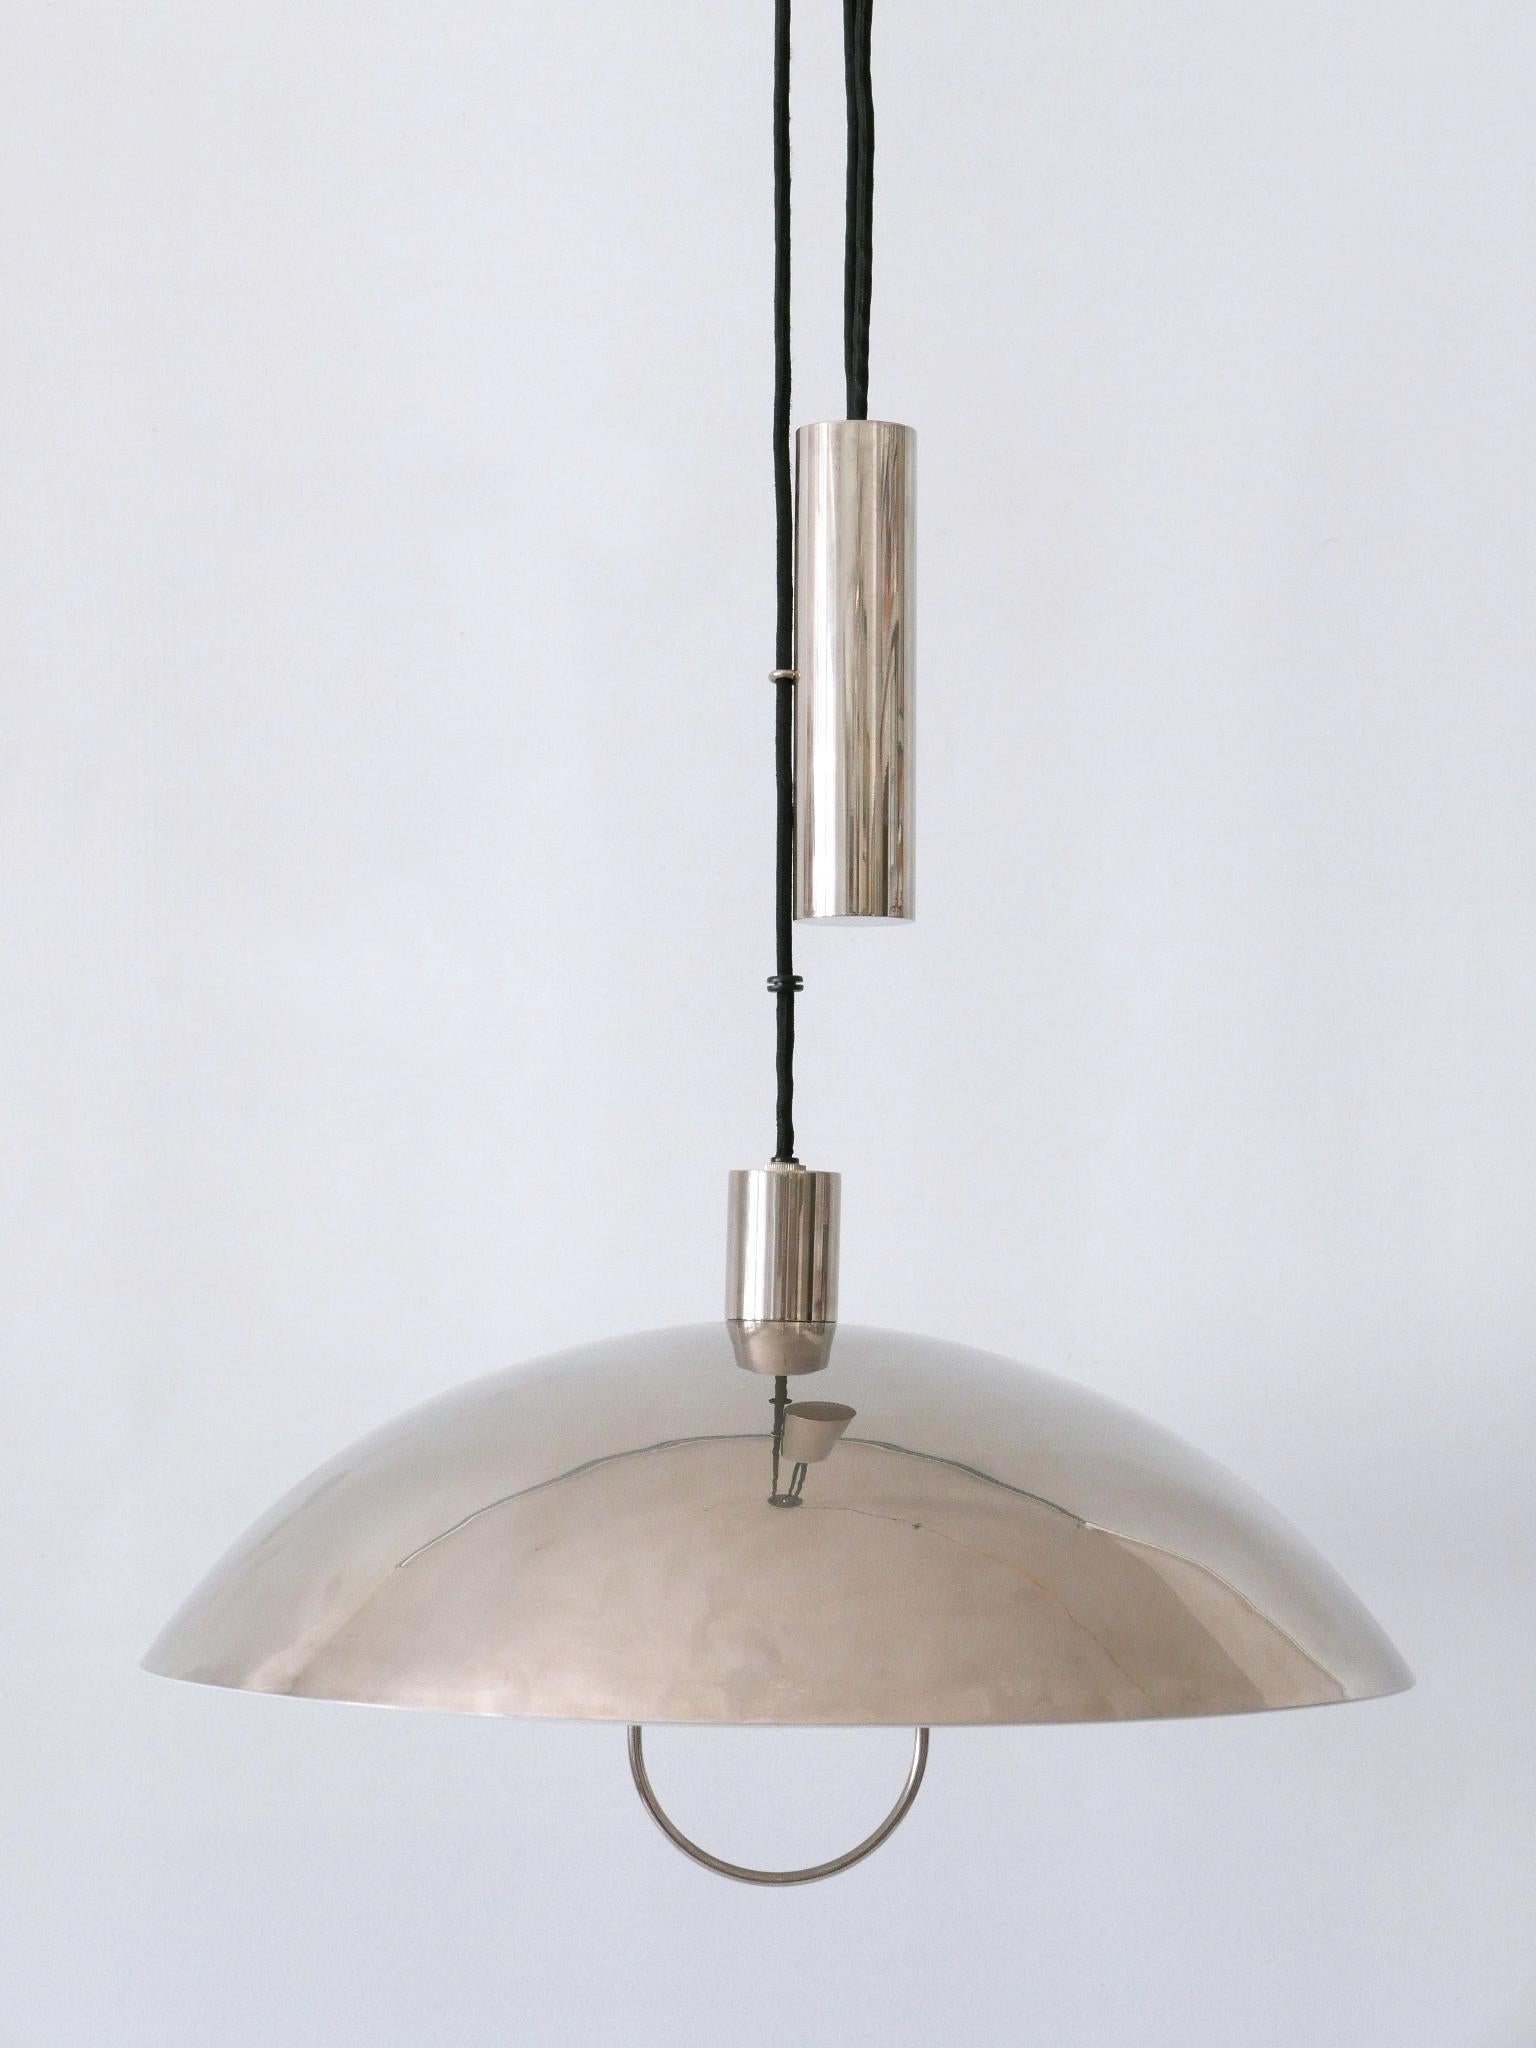 Early Tecnolumen Pendant Lamp 'Bauhaus HMB 25/500' by Marianne Brandt 1980s For Sale 1